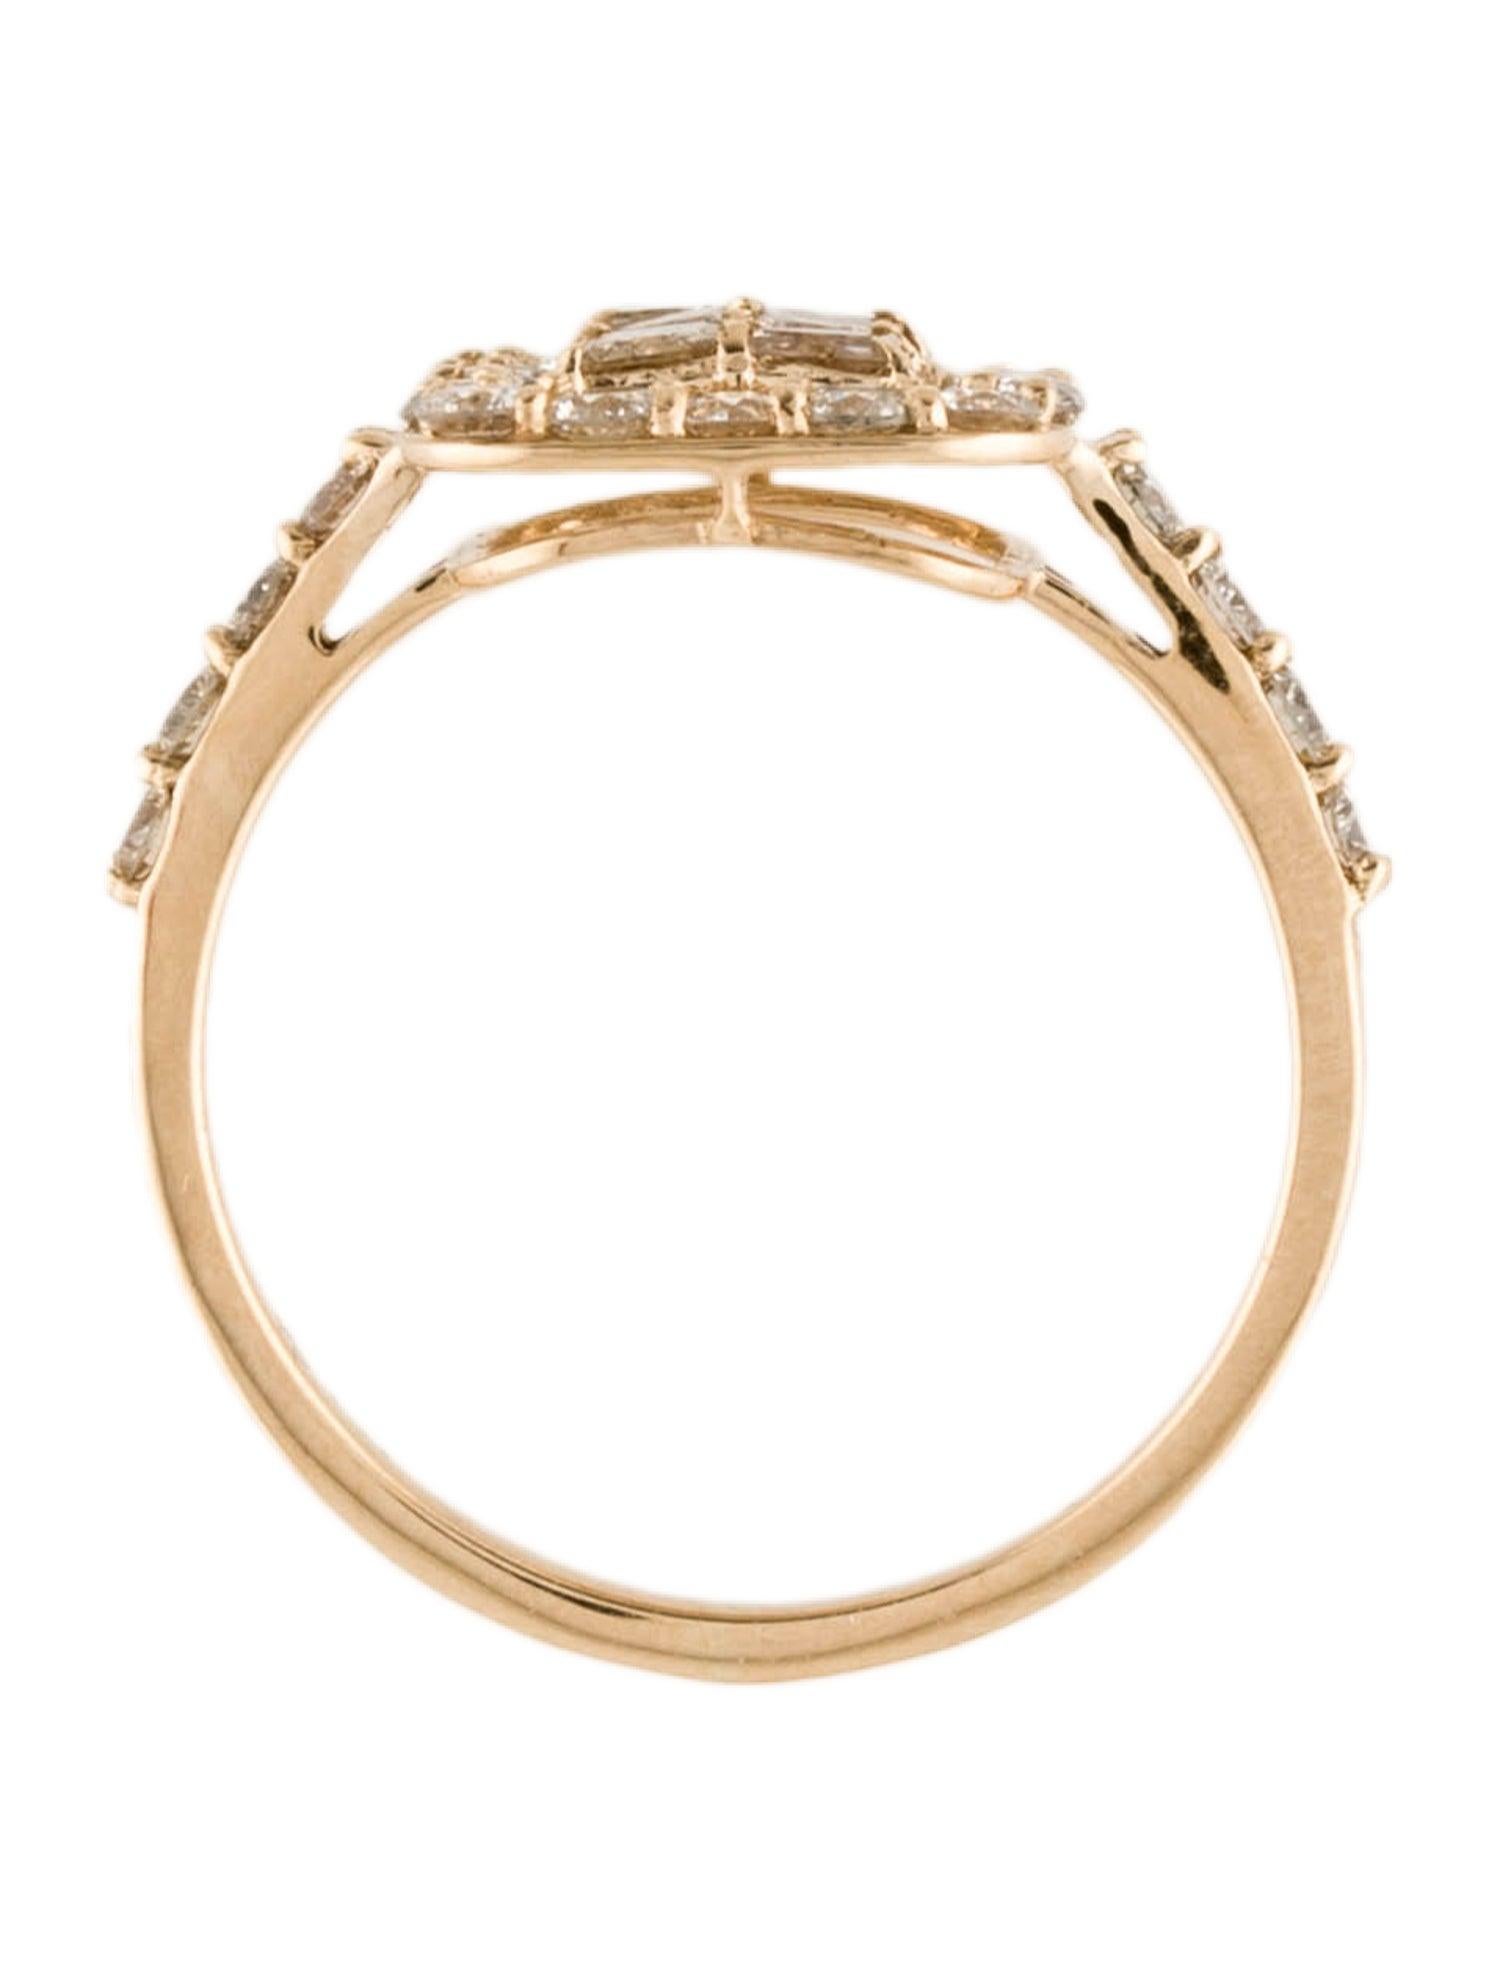 Women's Elegant 14K Yellow Gold 1.29ctw Diamond Cocktail Ring Size 6.75 For Sale